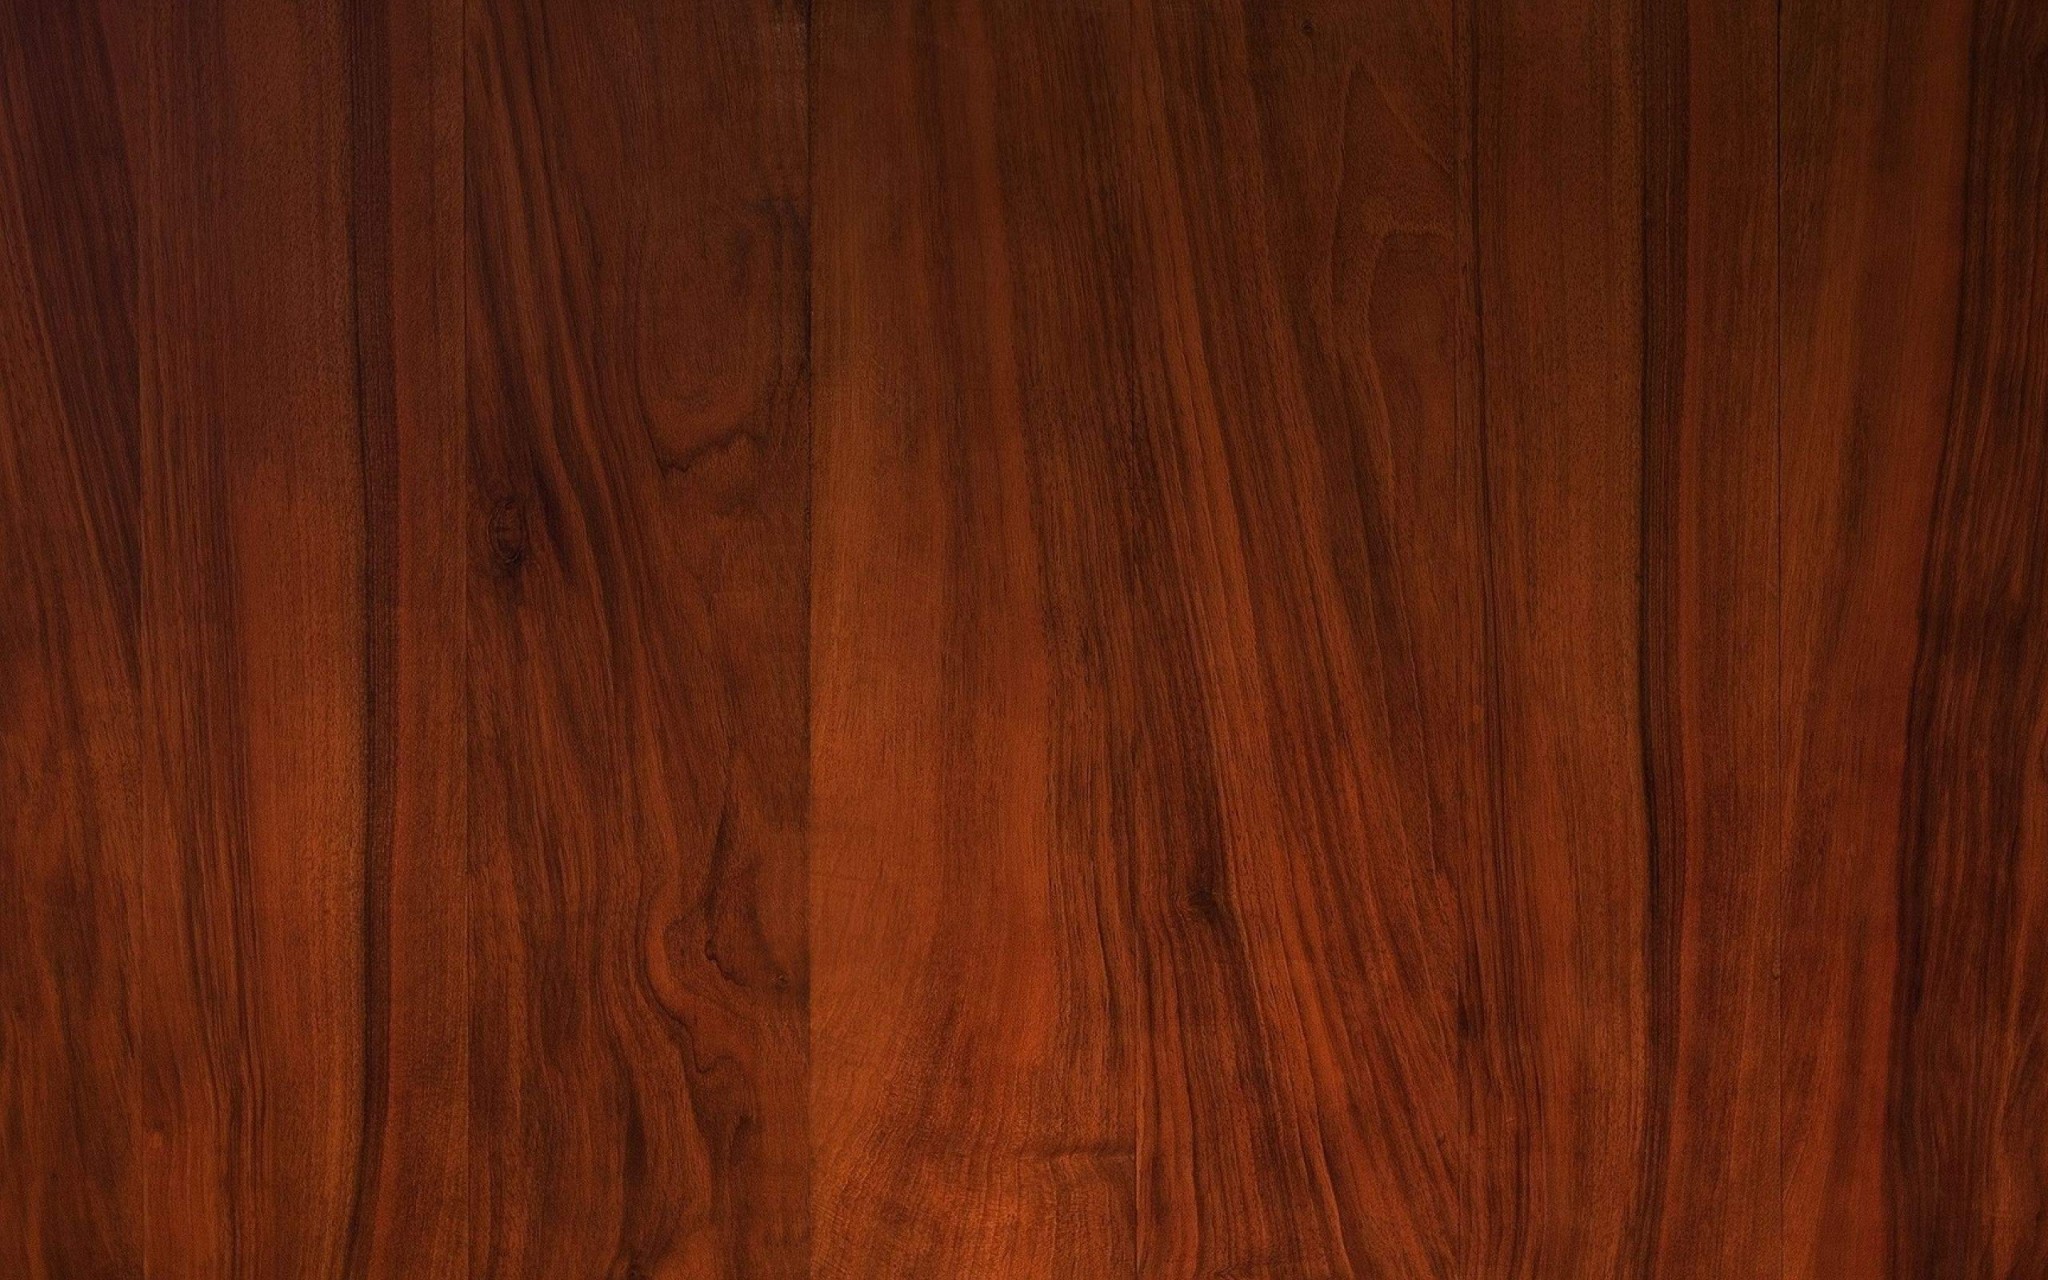 2048x1280 wood background hd - Hardwood Background Hd